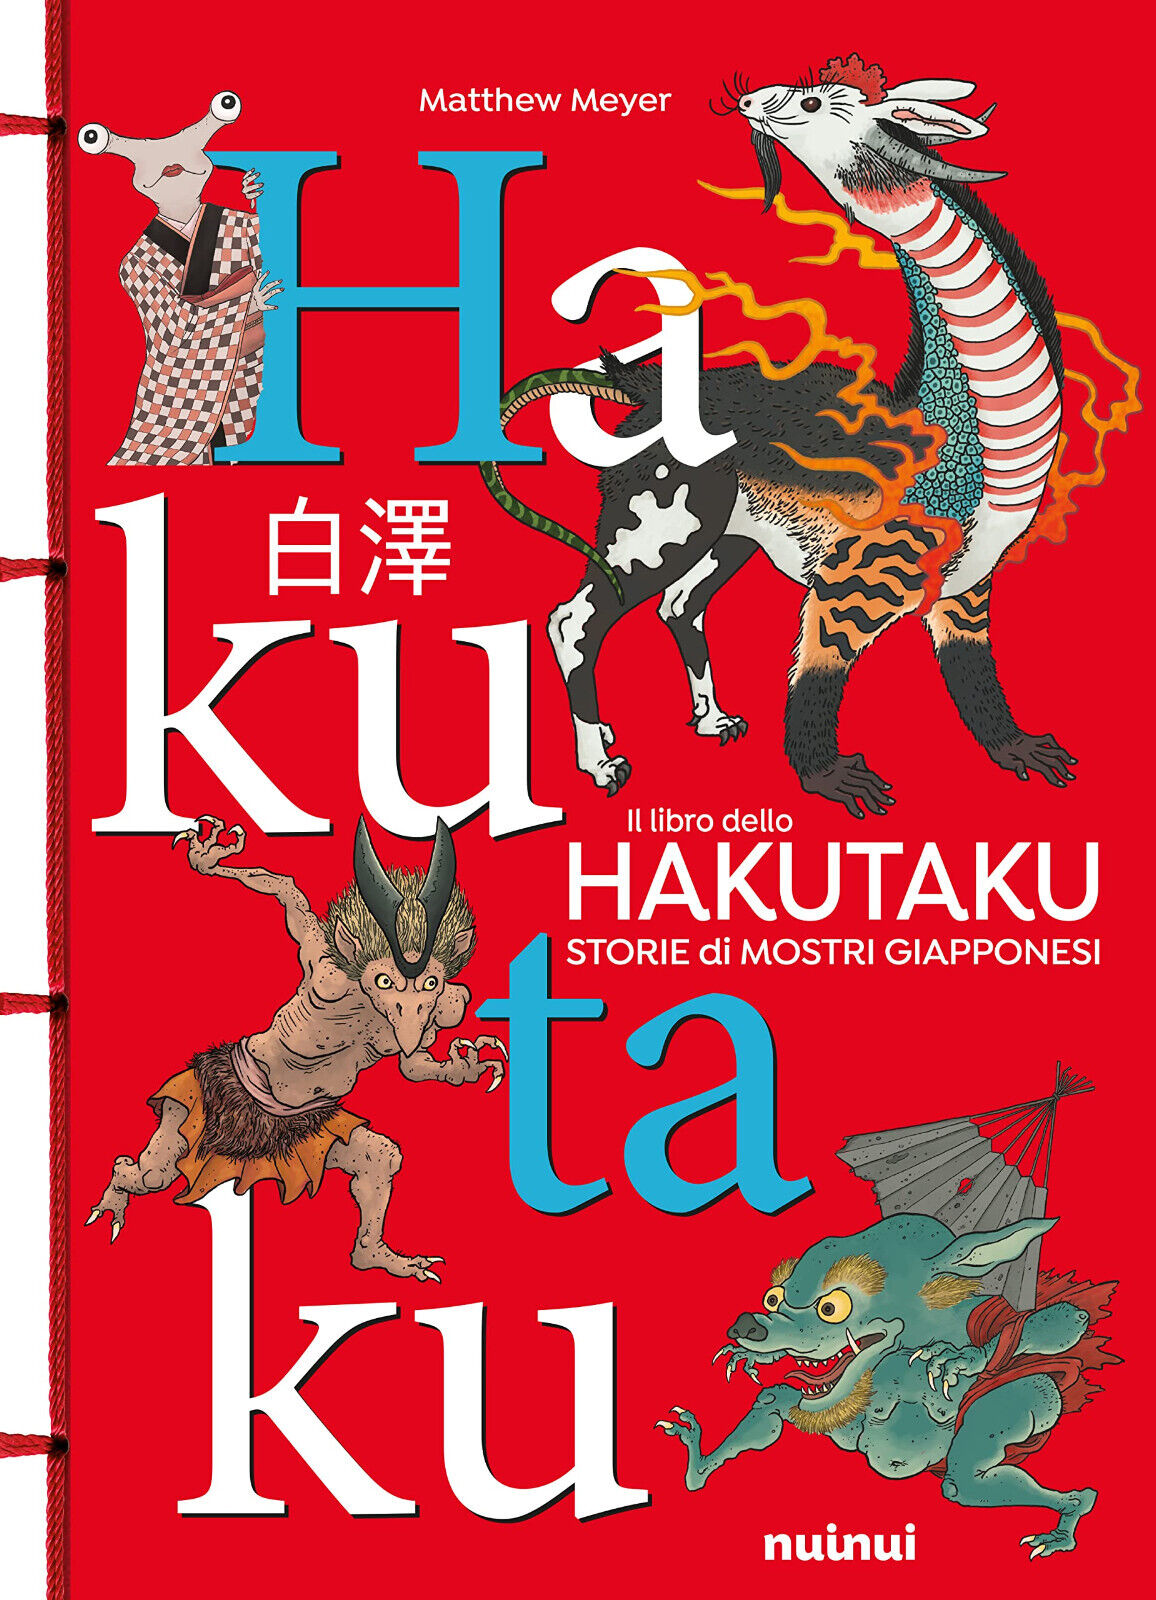 Il libro dello Hakutaku - Matthew Meyer - Nuinui, 2020 libro usato